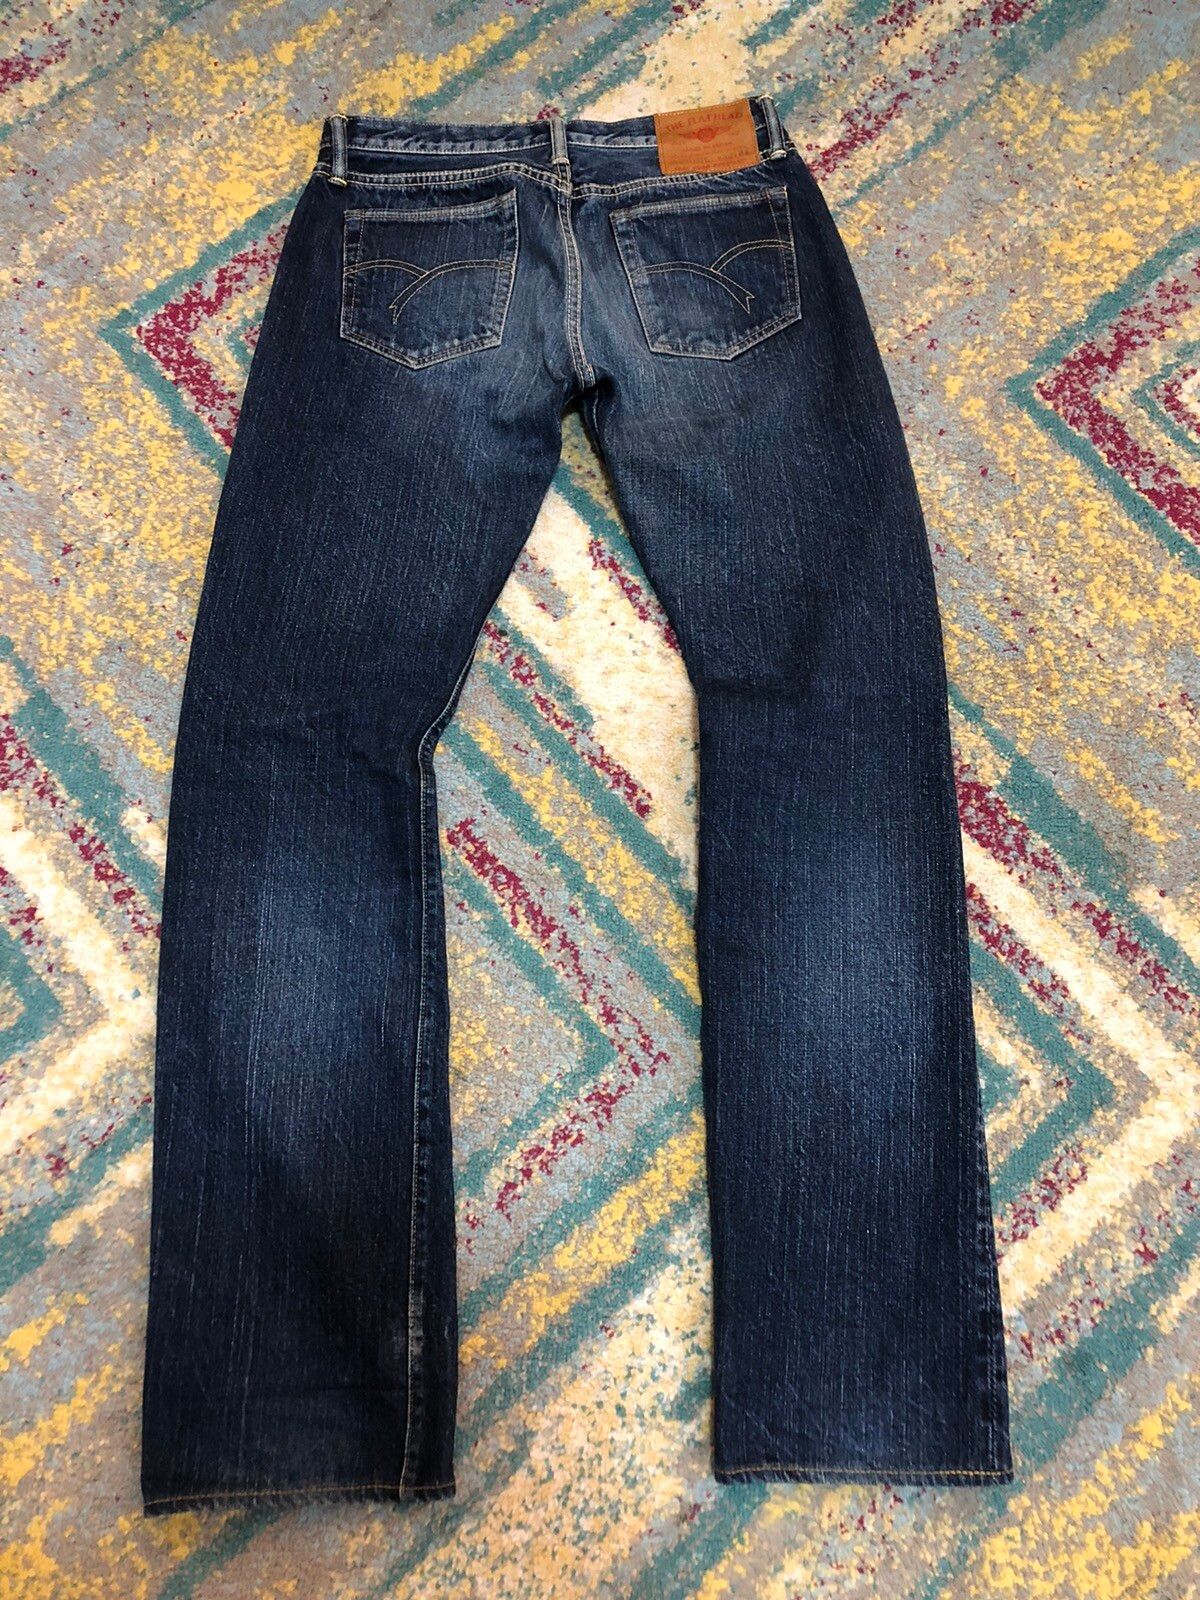 The Flat Head Selvedge 3001SPC Jeans - 2